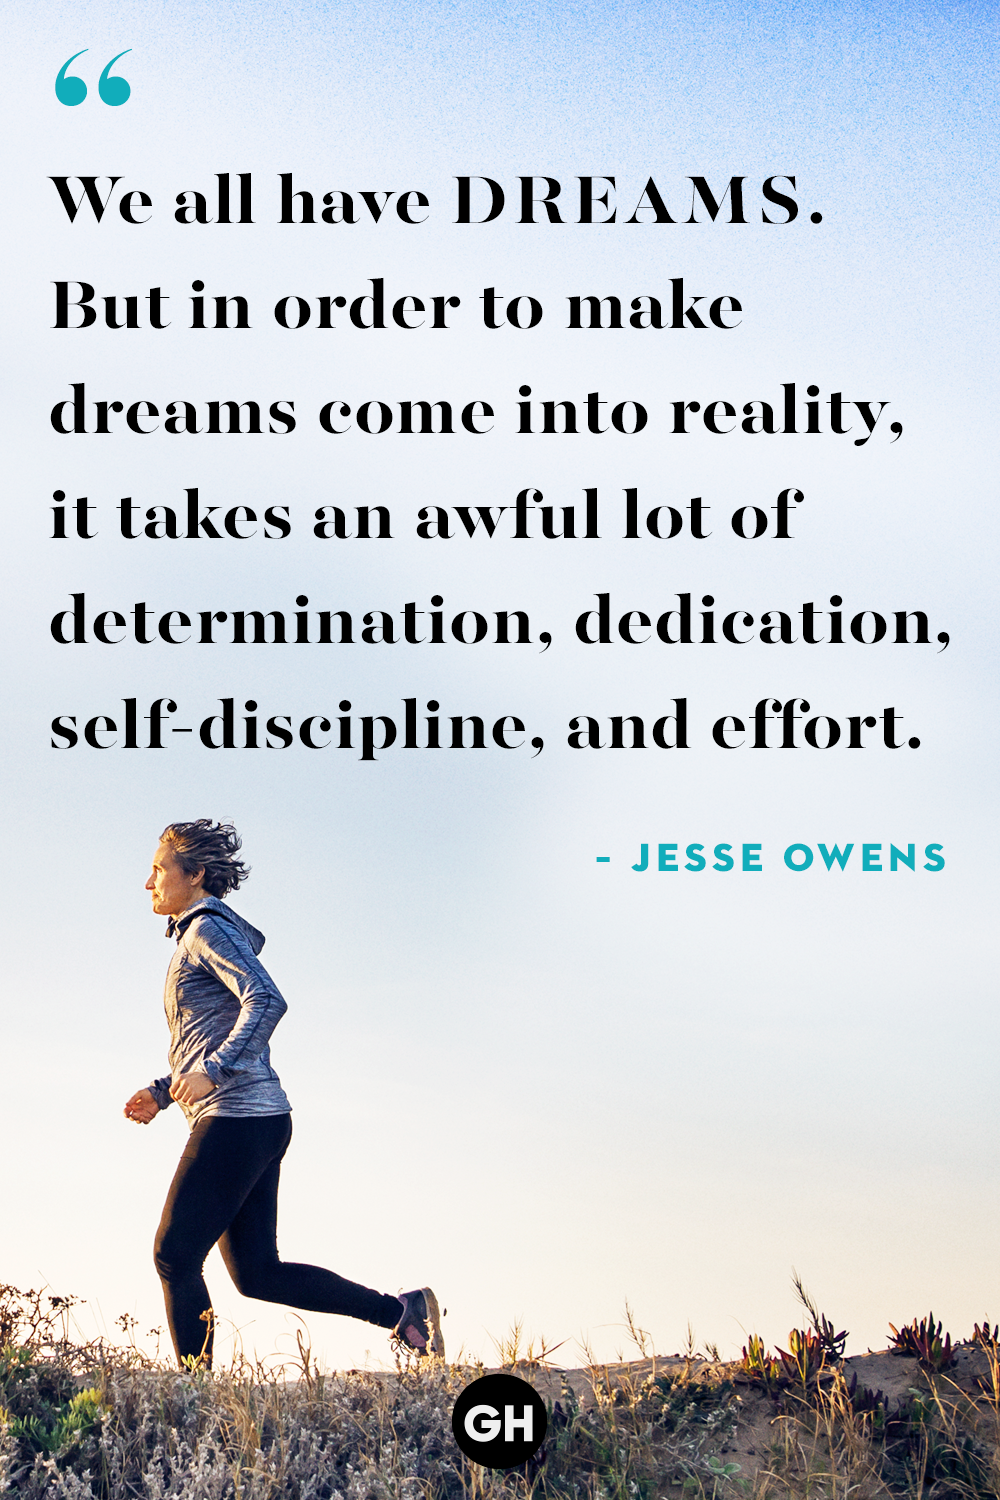 fitness determination quotes